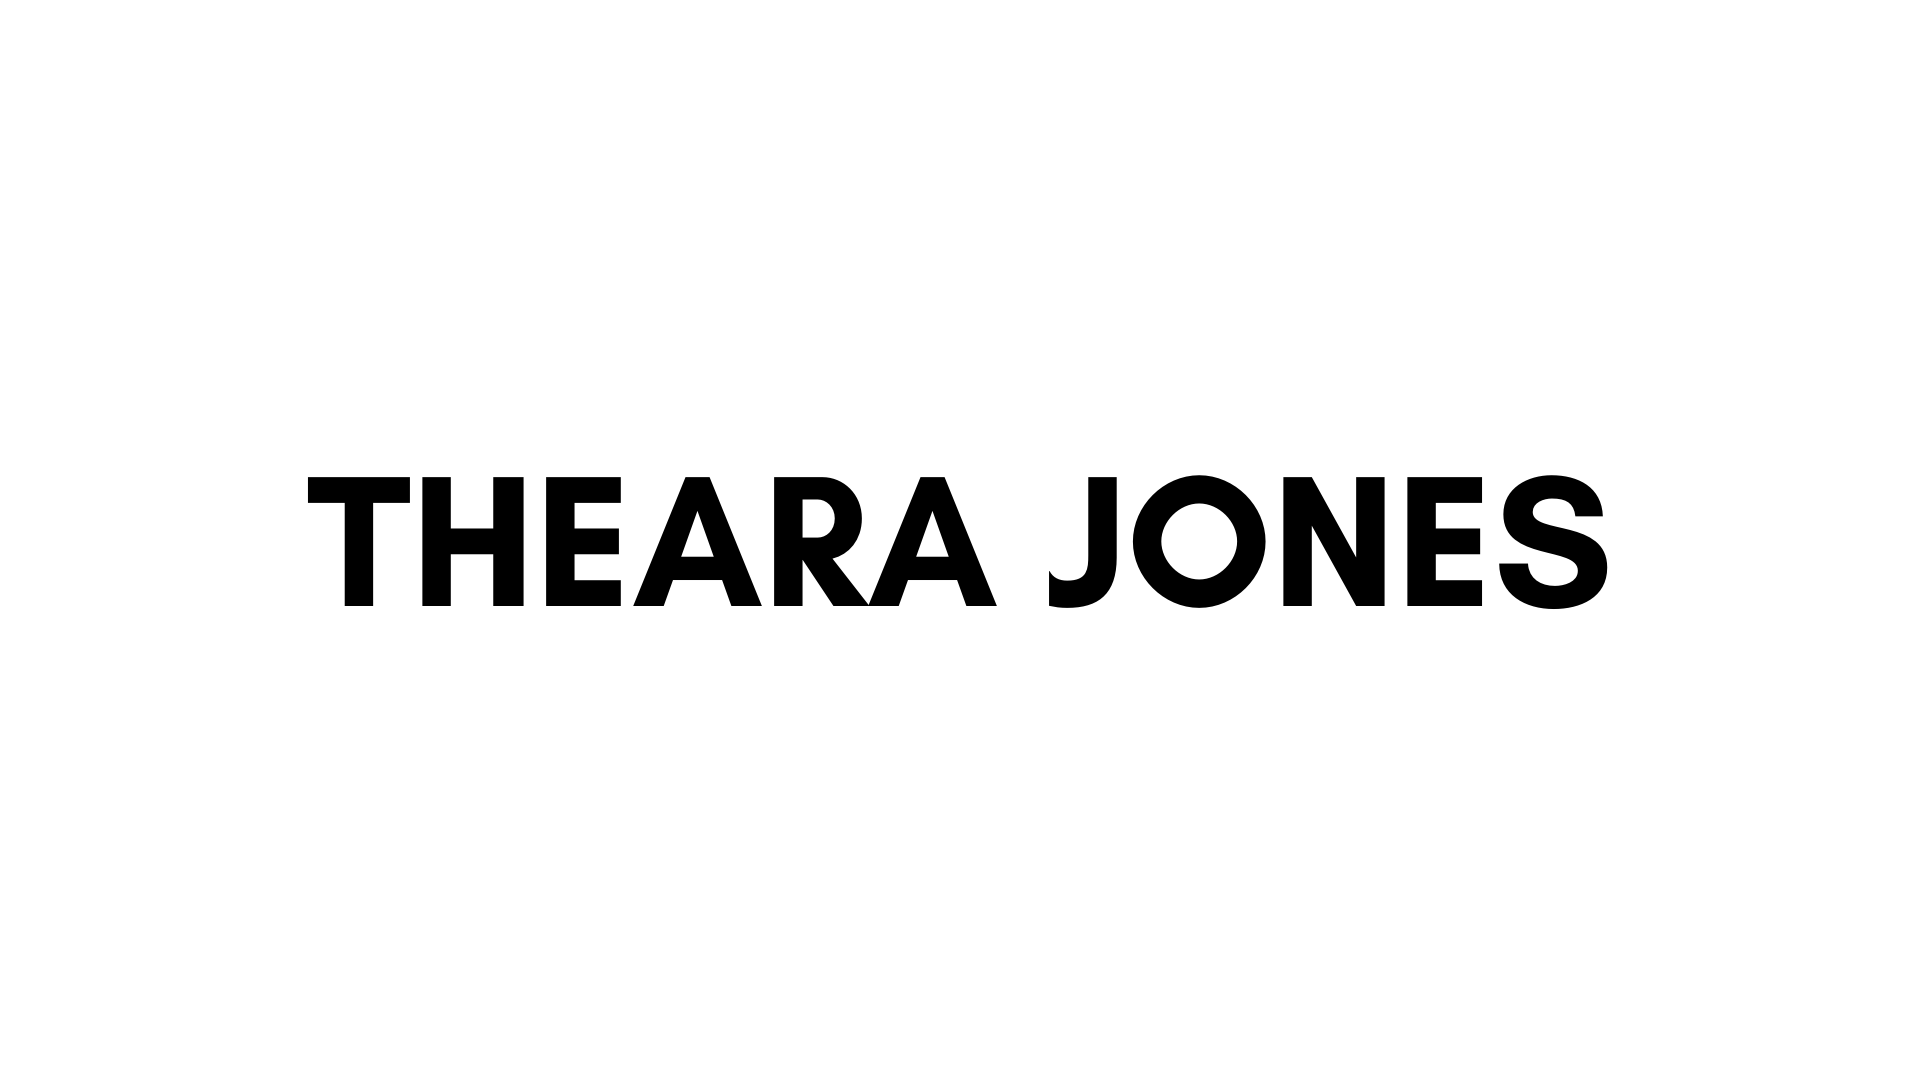 THEARA JONES